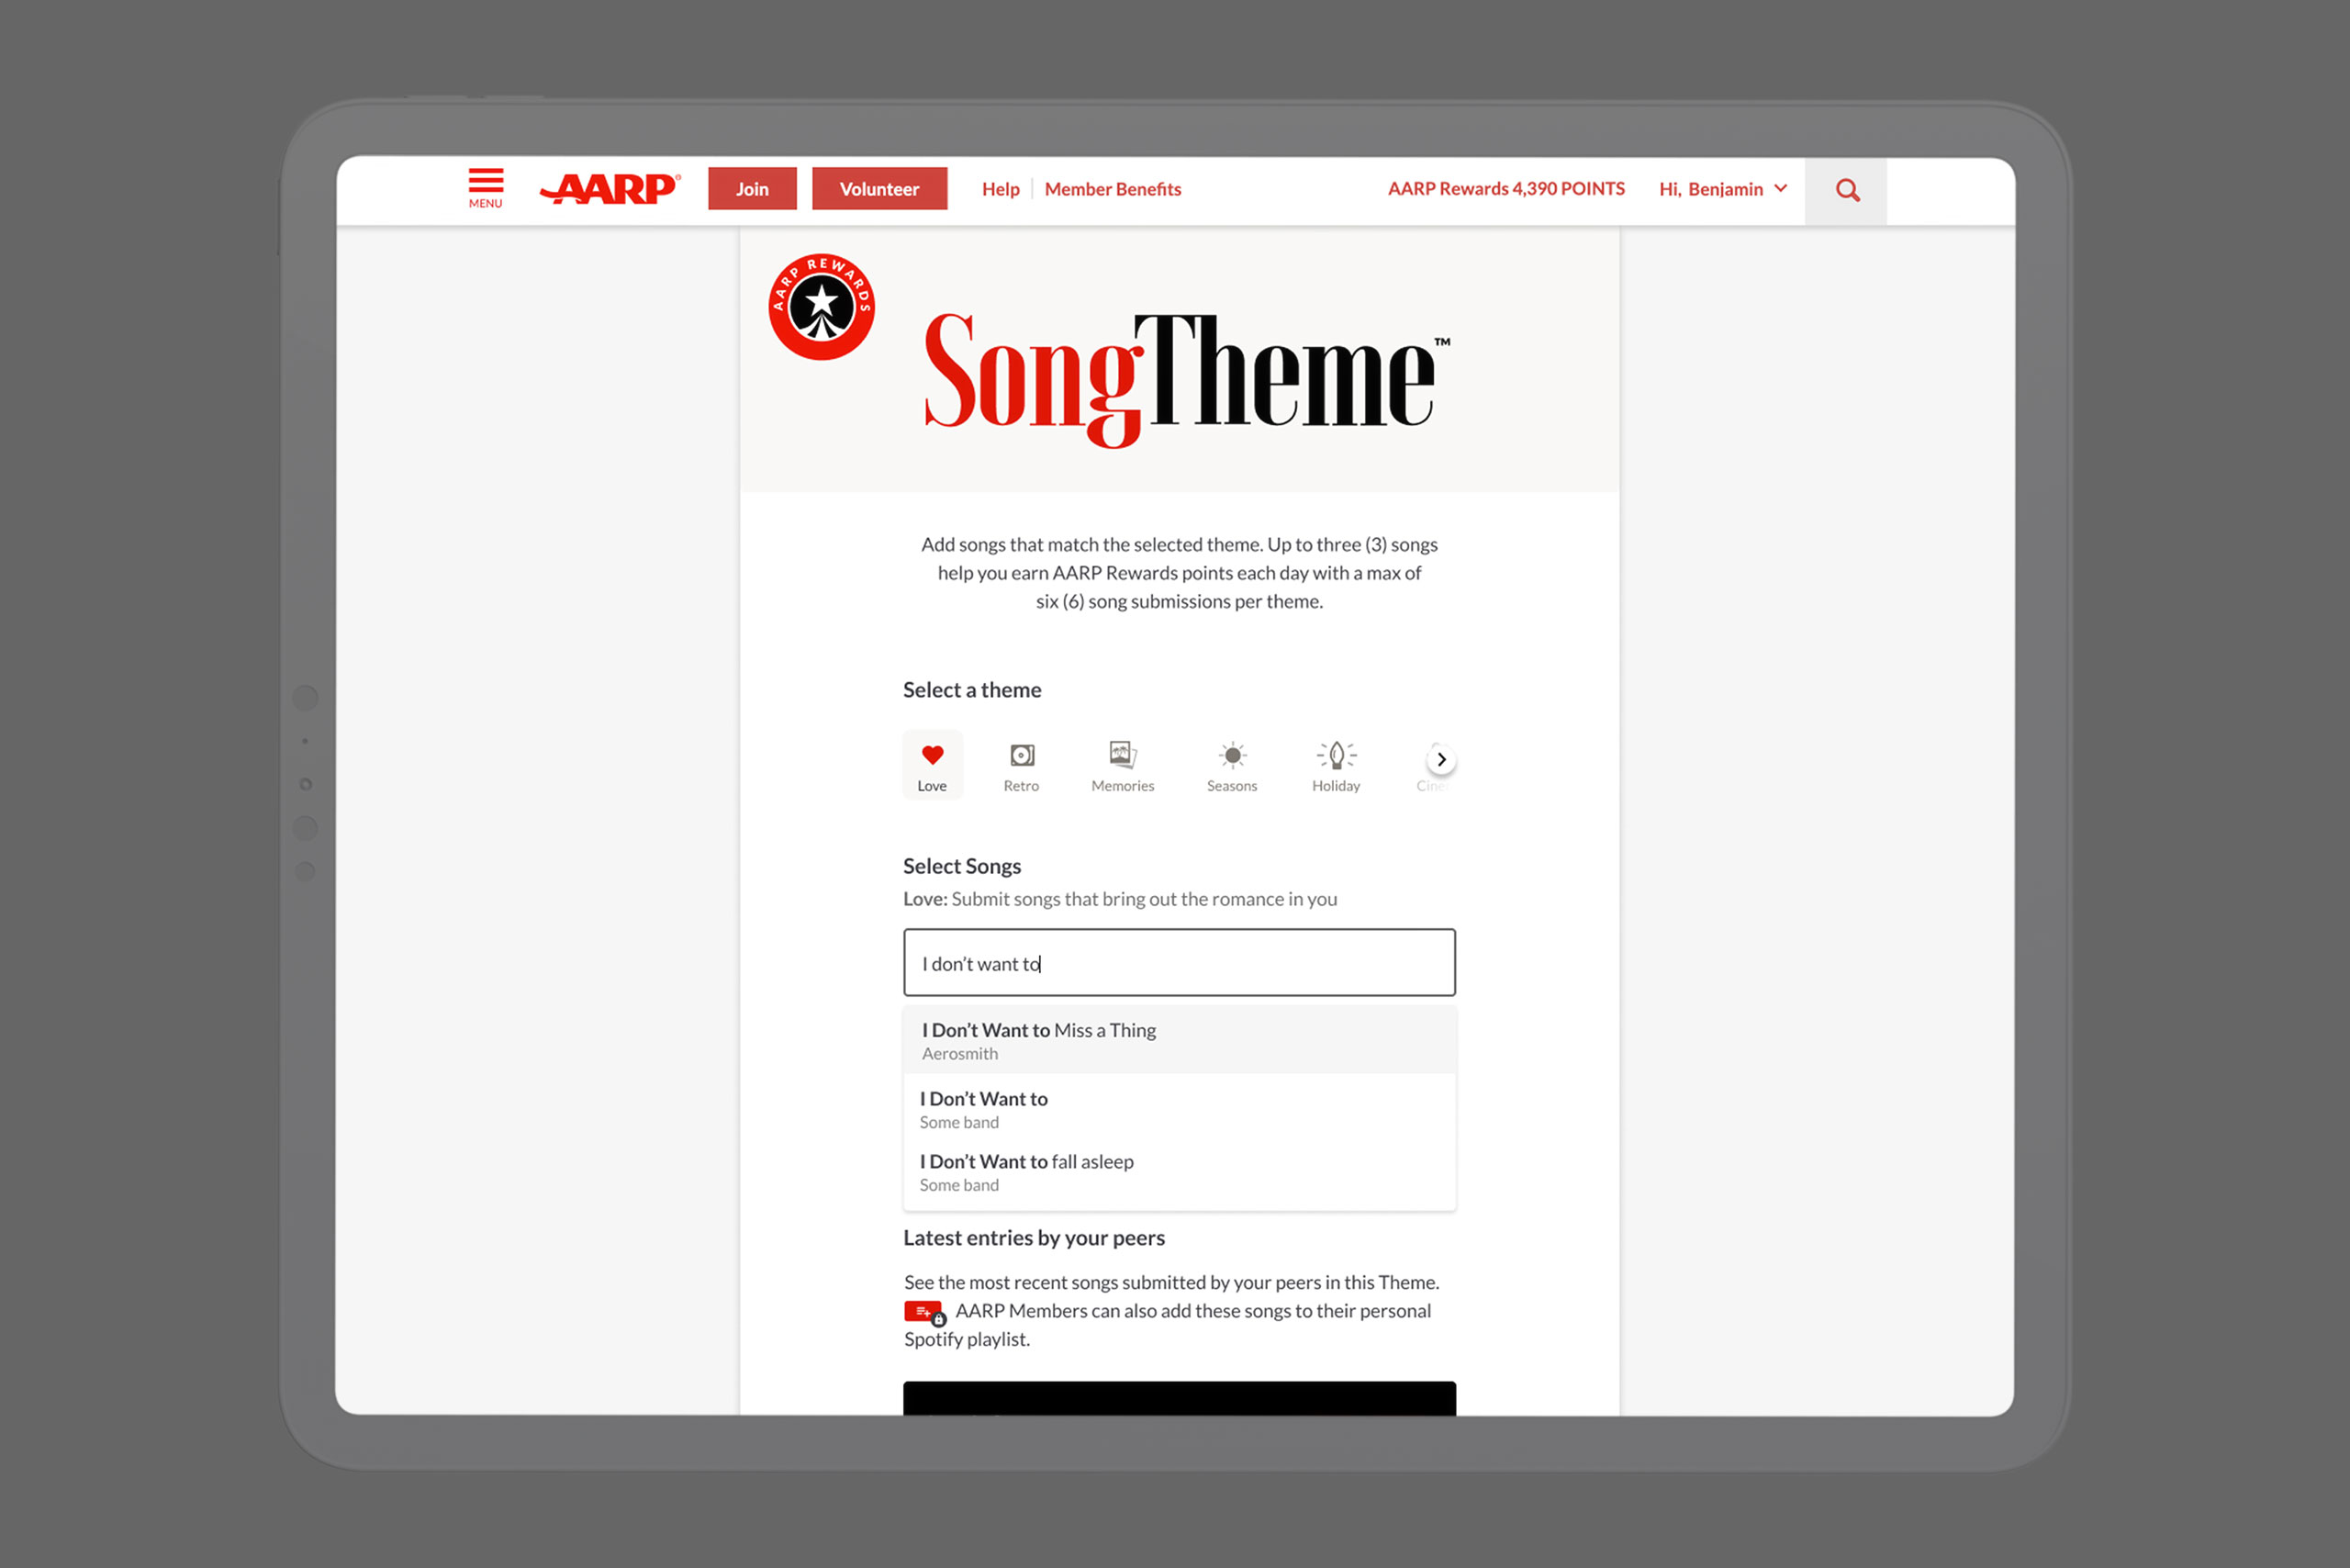 SongTheme Desktop Screen initial entry